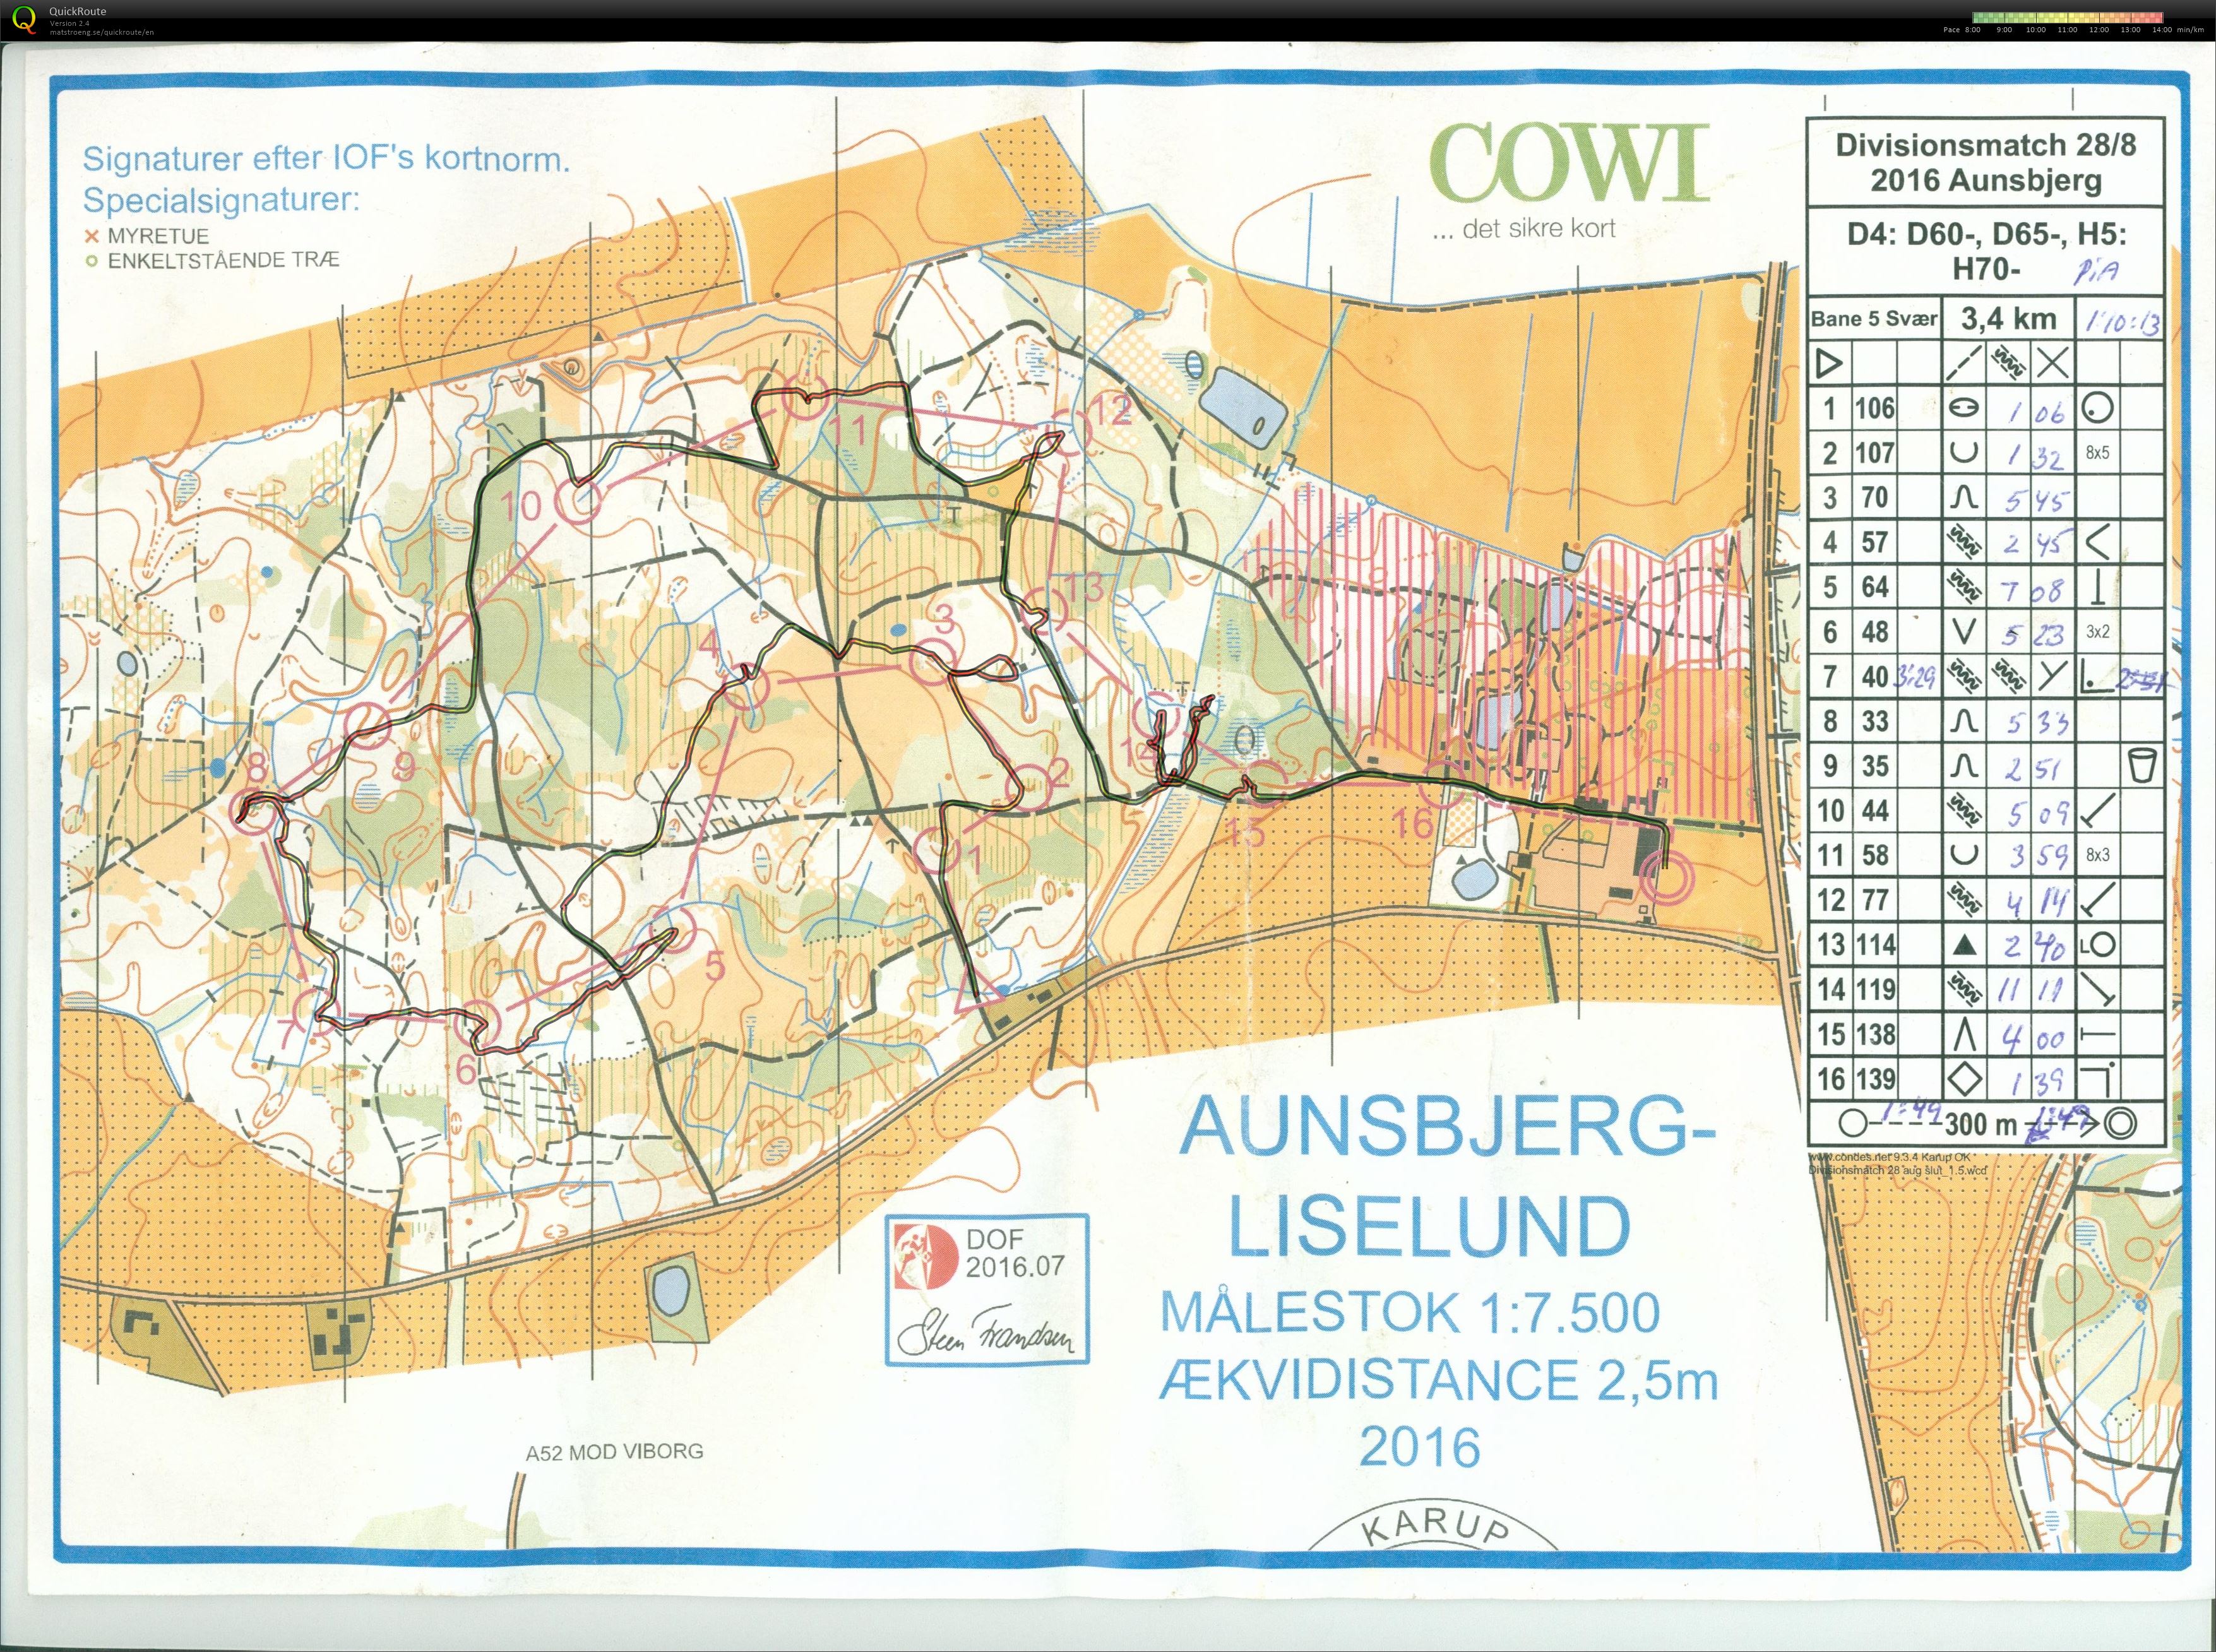 Aunsbjerg Liselund, D4, D60, Bane 5, Pia Gade, 28081 (28.08.2016)